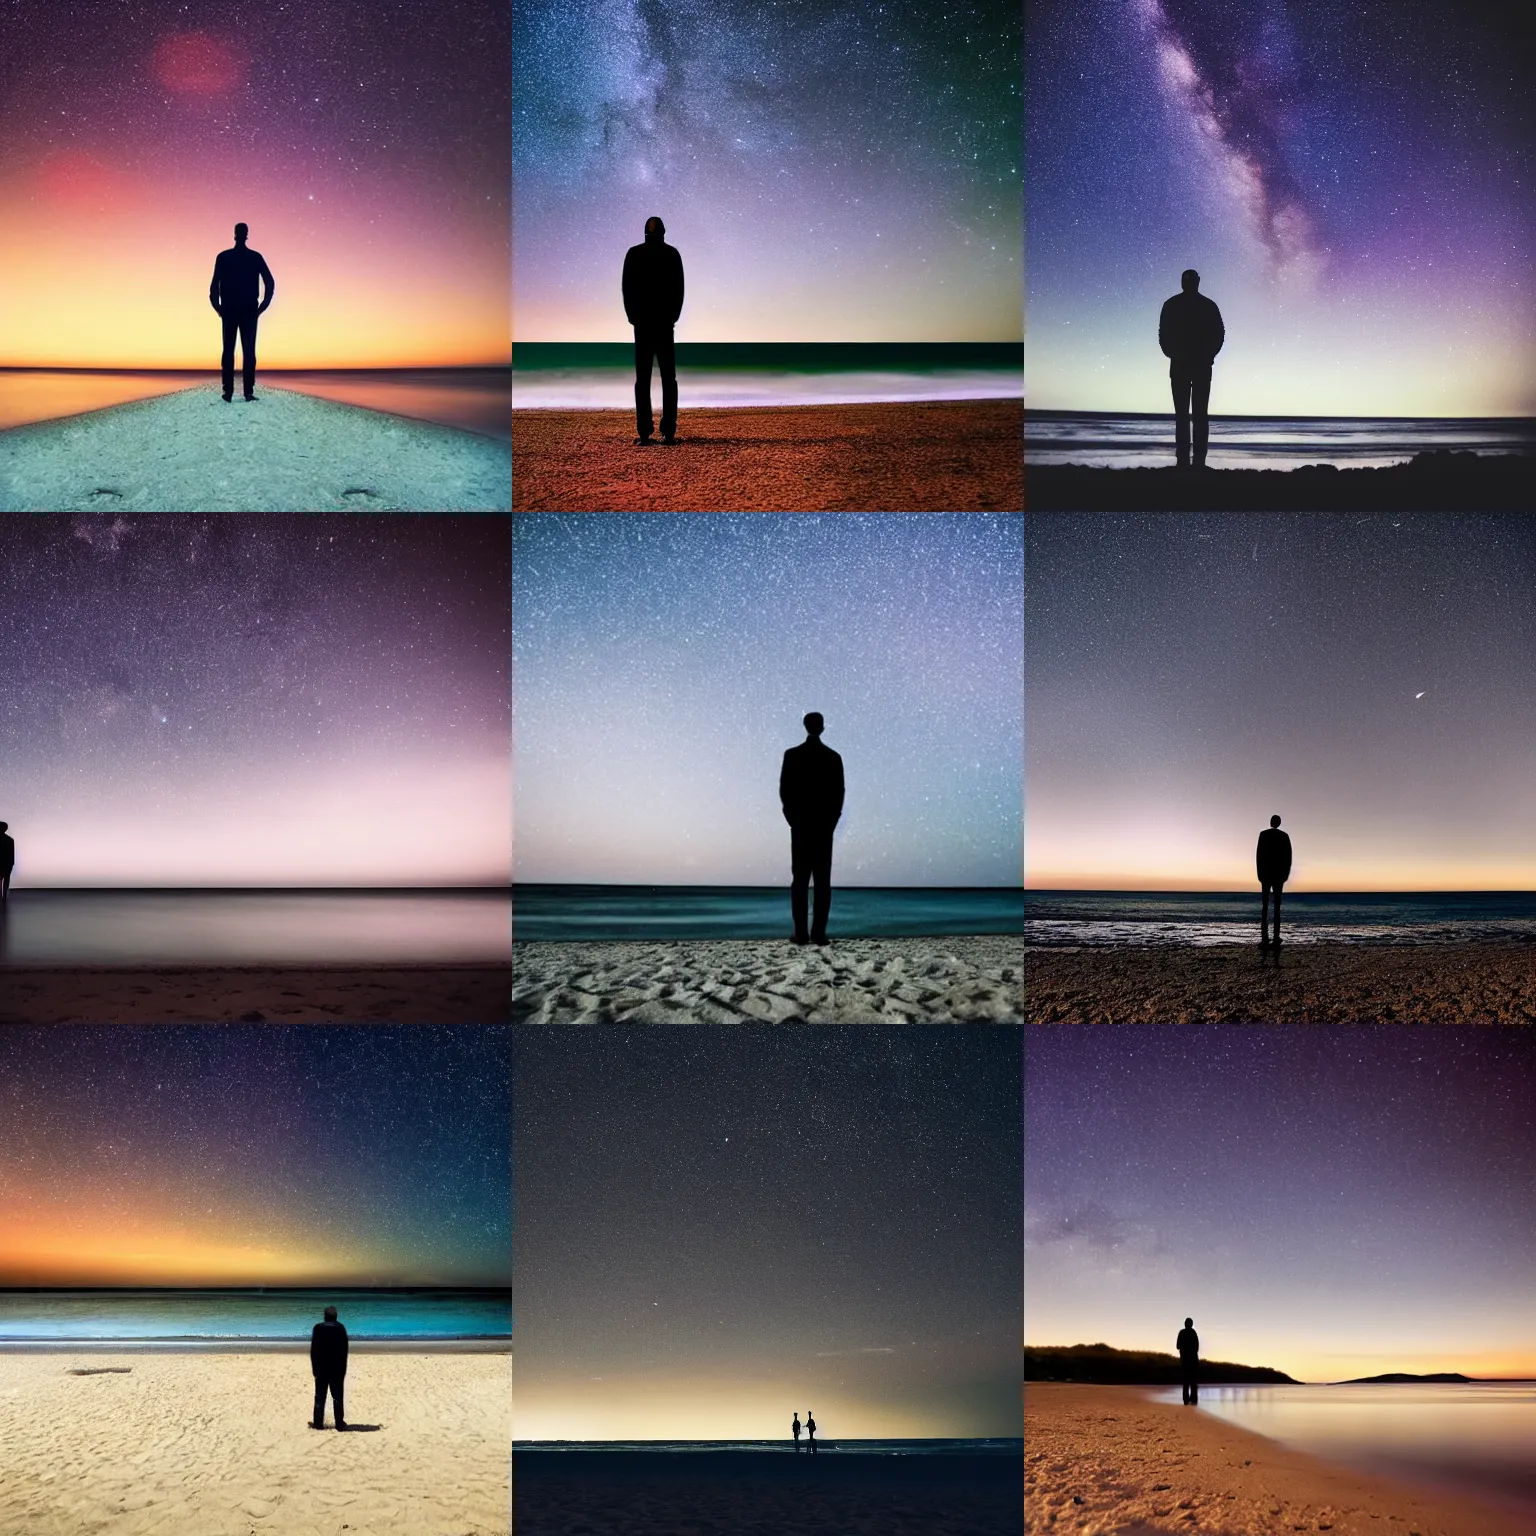 Prompt: A man stand alone, infront of a beach, beautiful night sky, stars, dark